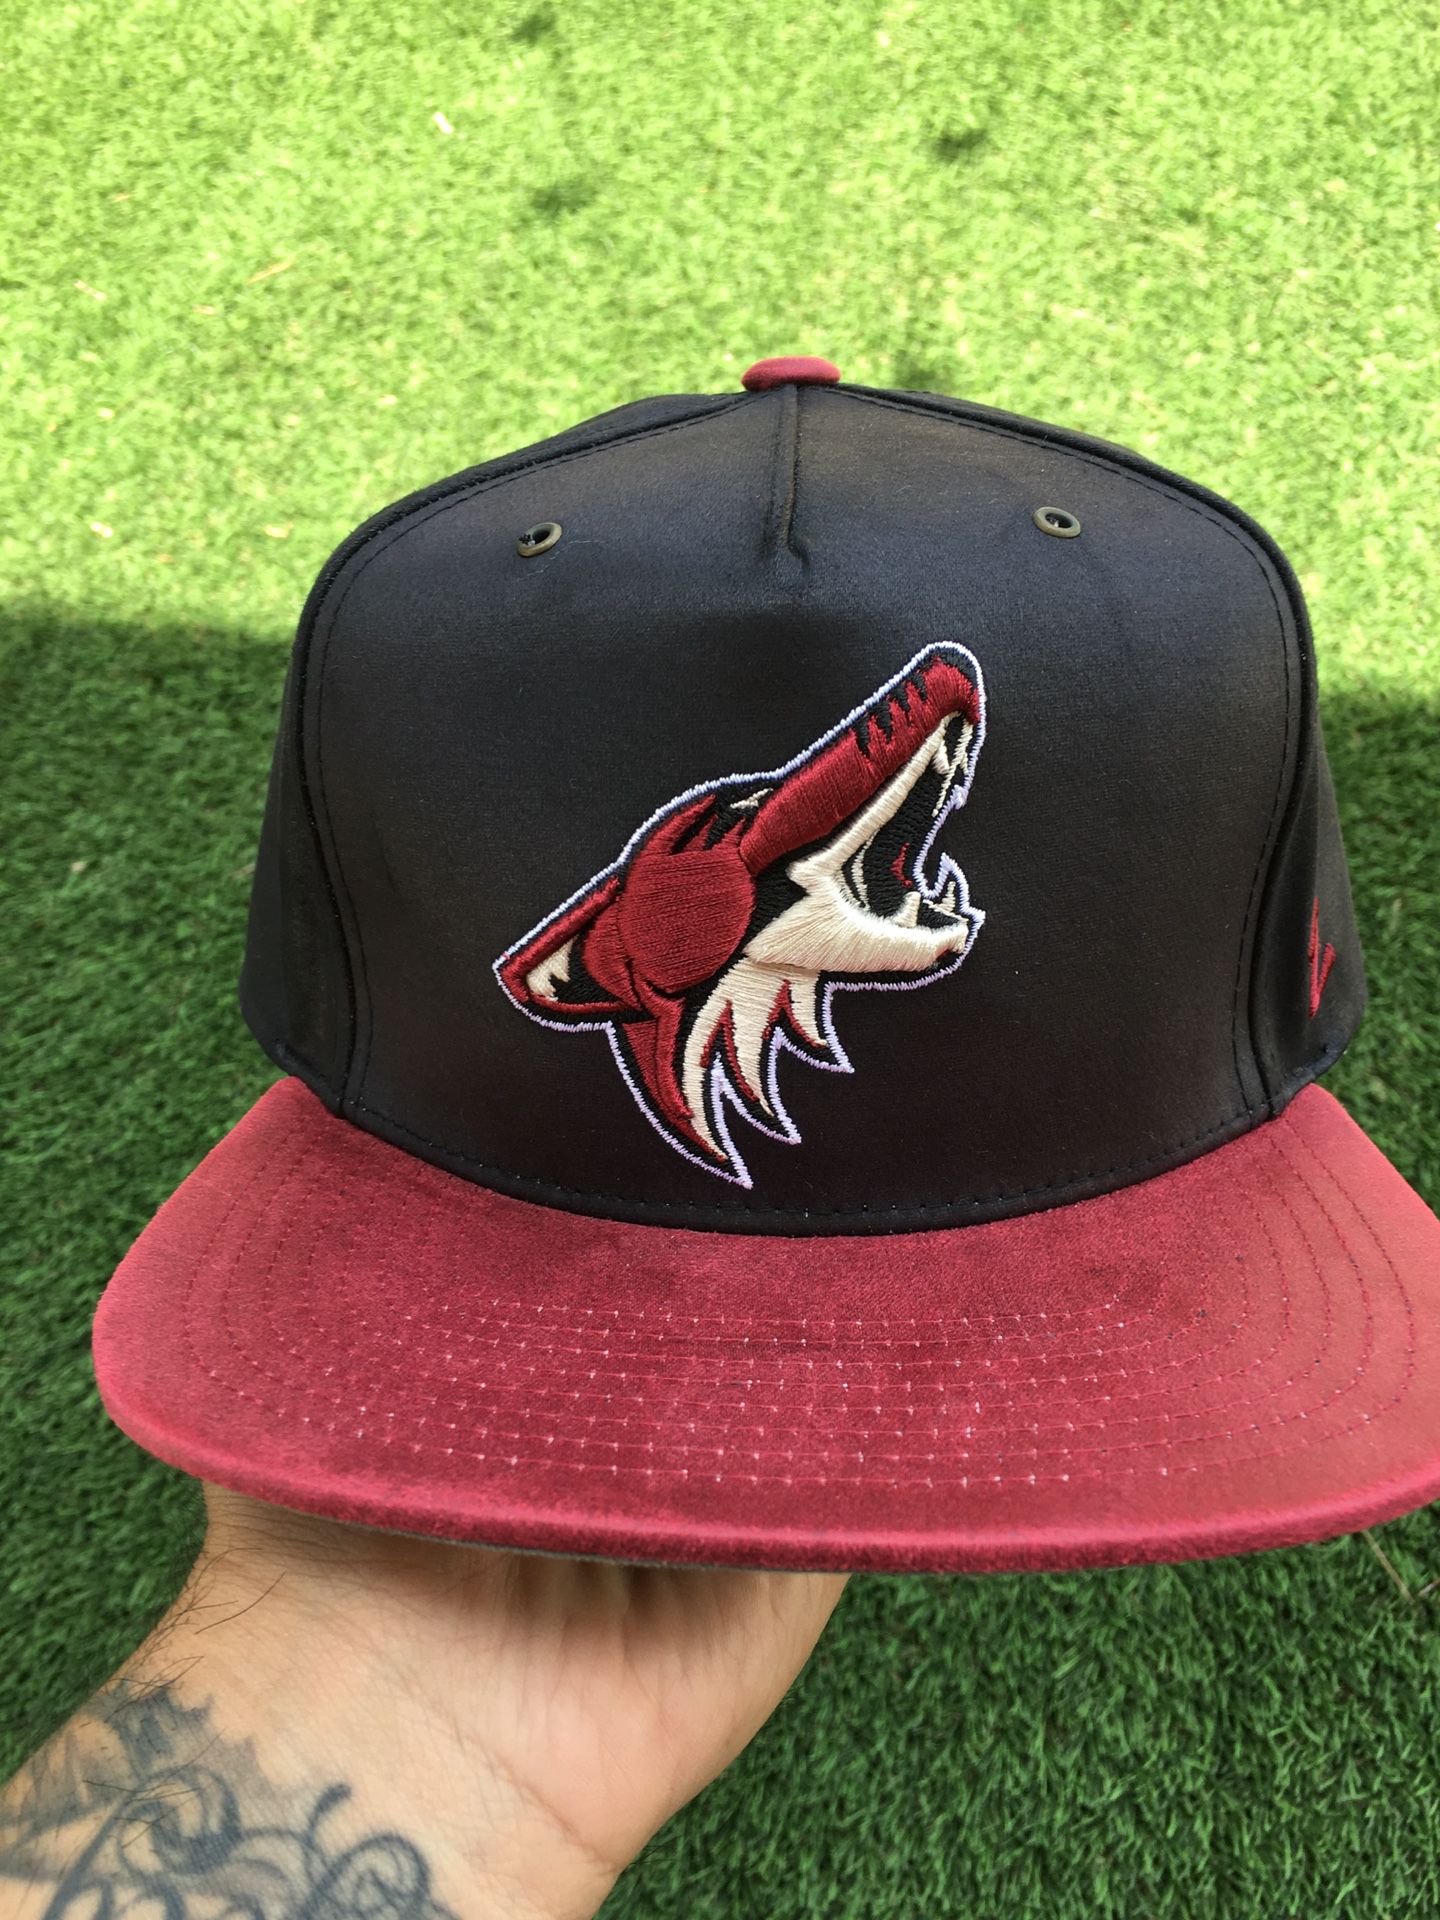 Arizona Coyotes Hat 